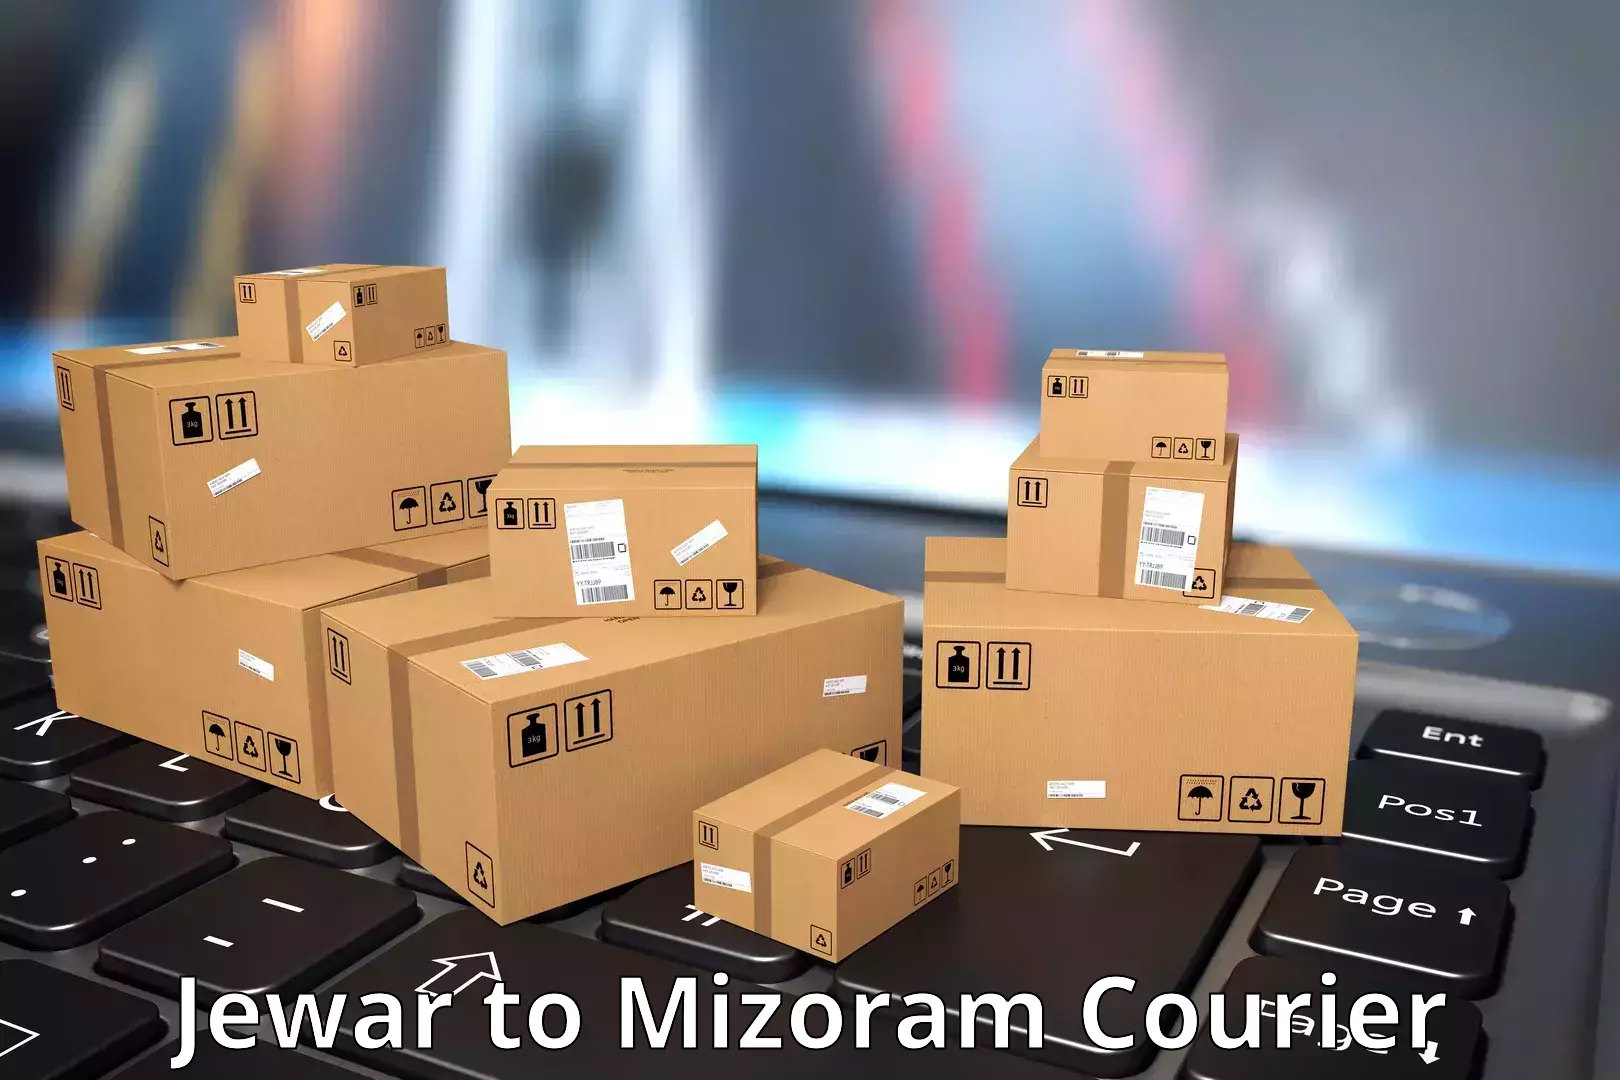 Express delivery capabilities Jewar to Mizoram